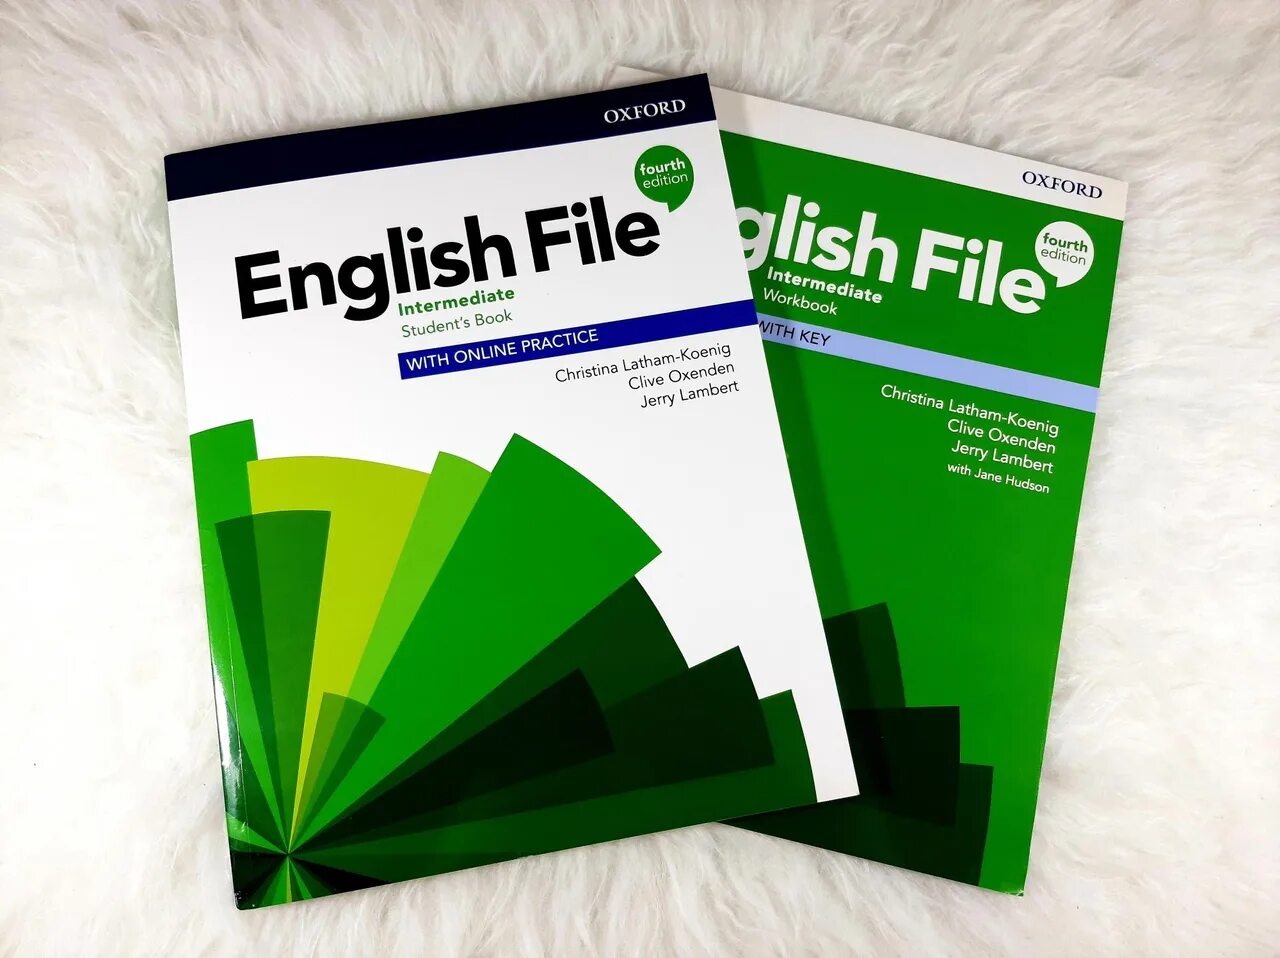 English file inter. Инглиш файл интермедиат 4 издание. English file. Intermediate. English file 4th Edition. English file pre Intermediate 4th Edition.